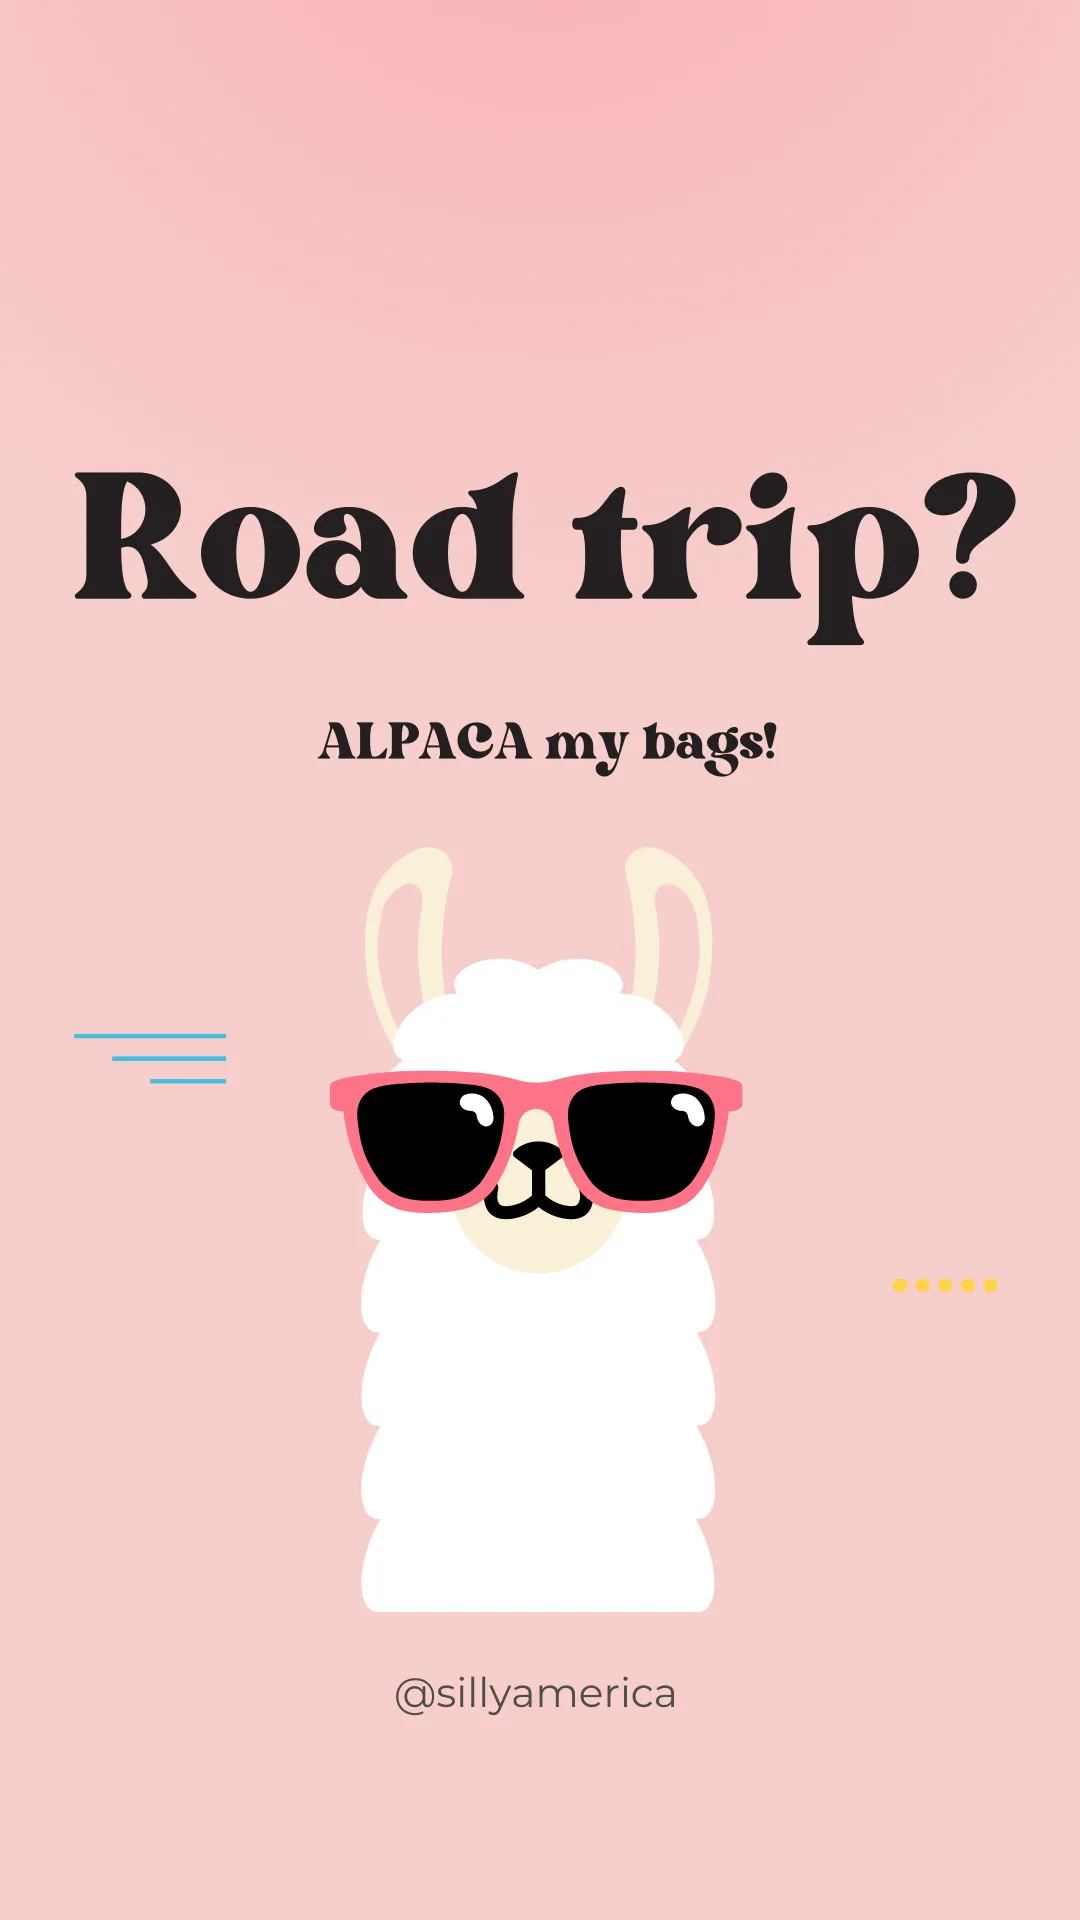 Road trip? ALPACA my bags! - Road Trip Puns